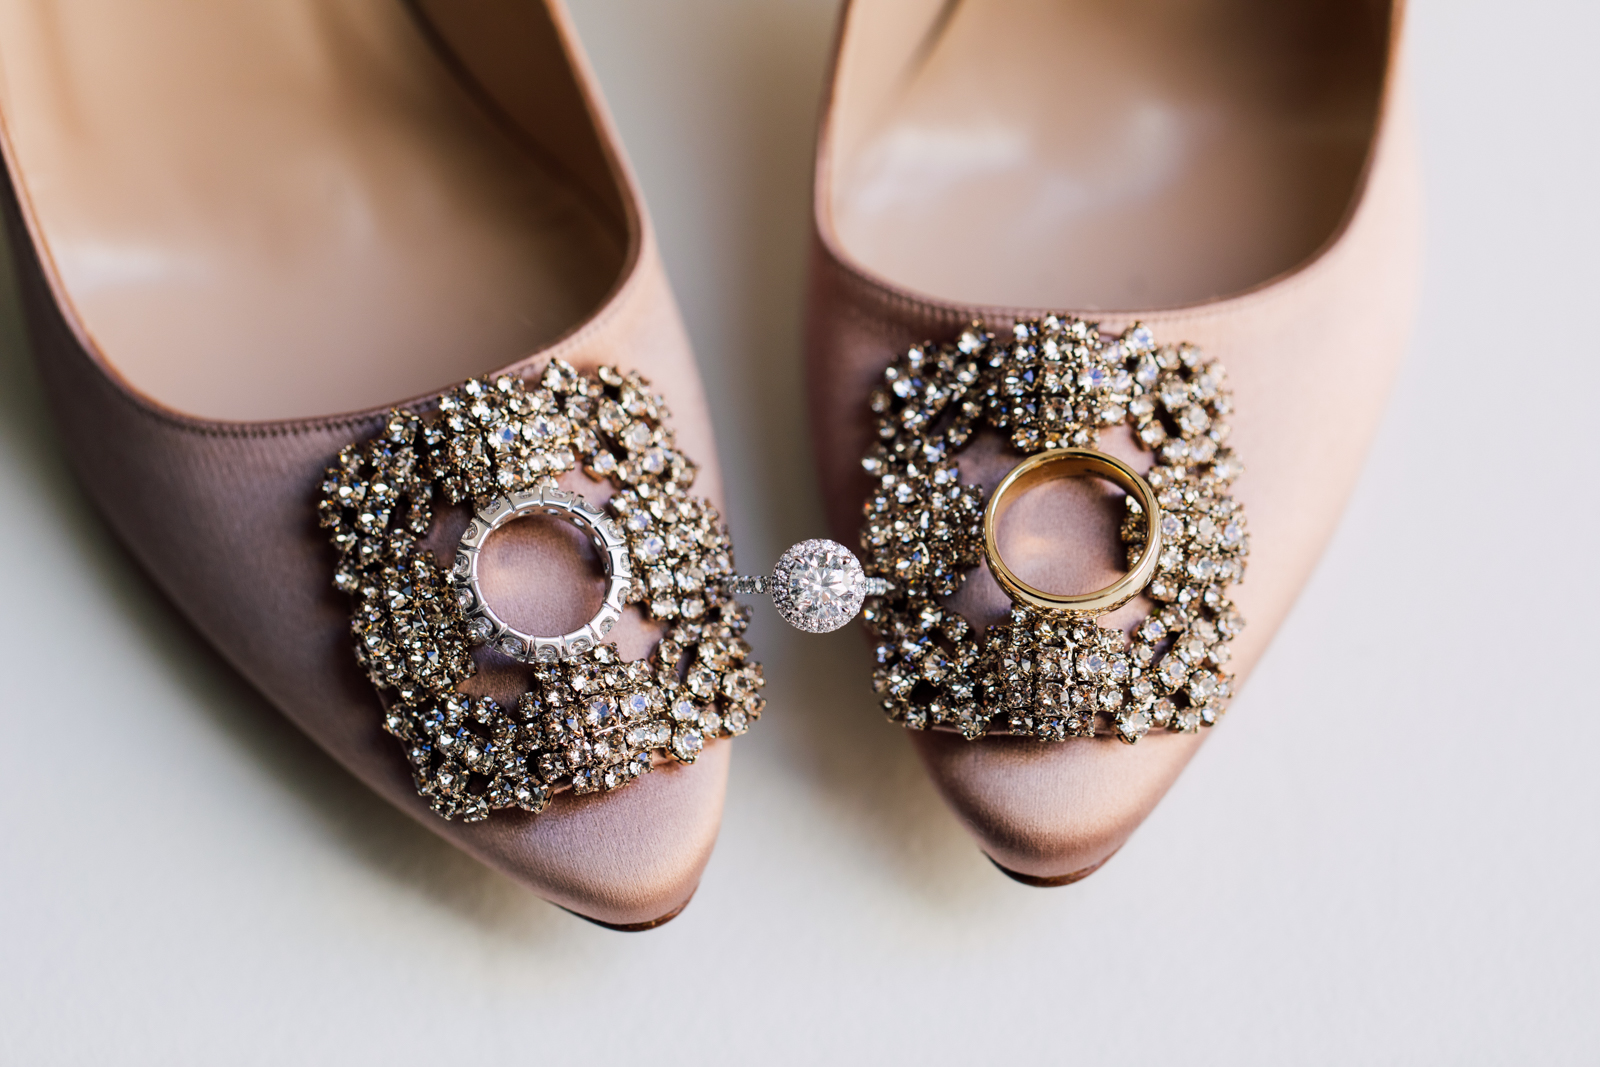 Bridal wedding shoes